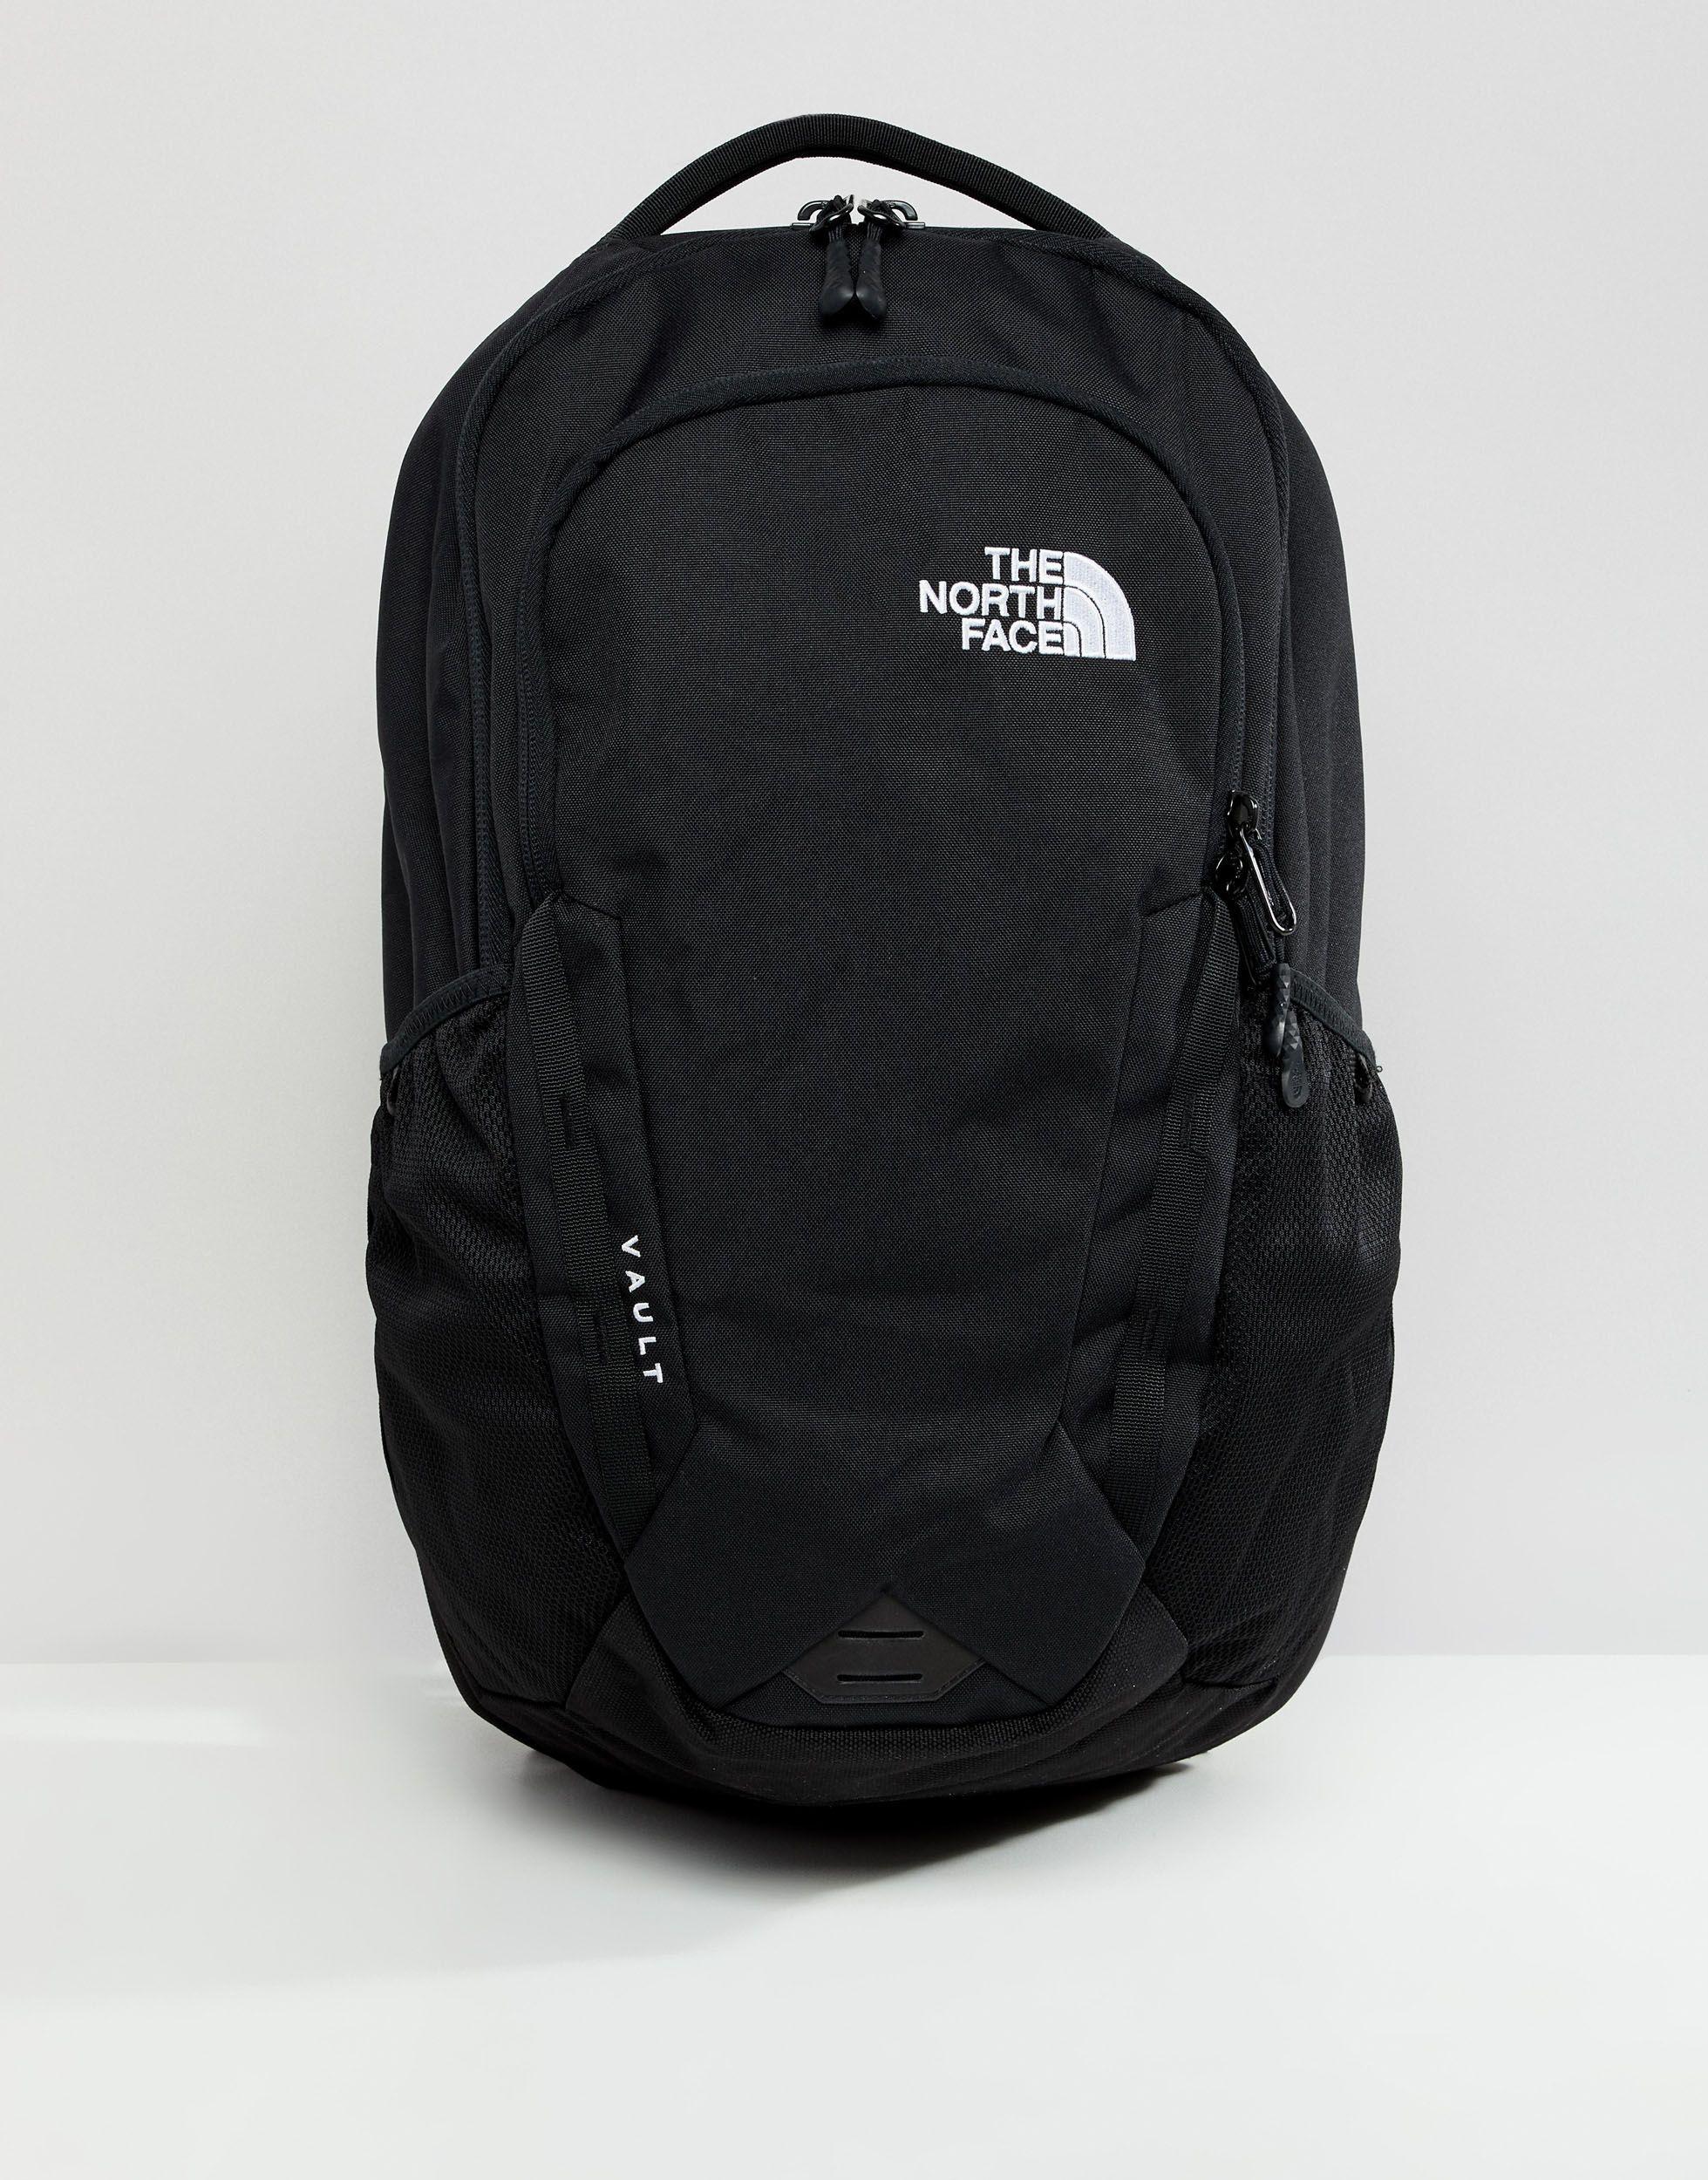 The North Face Vault Backpack 28 Litres in Black for Men - Lyst